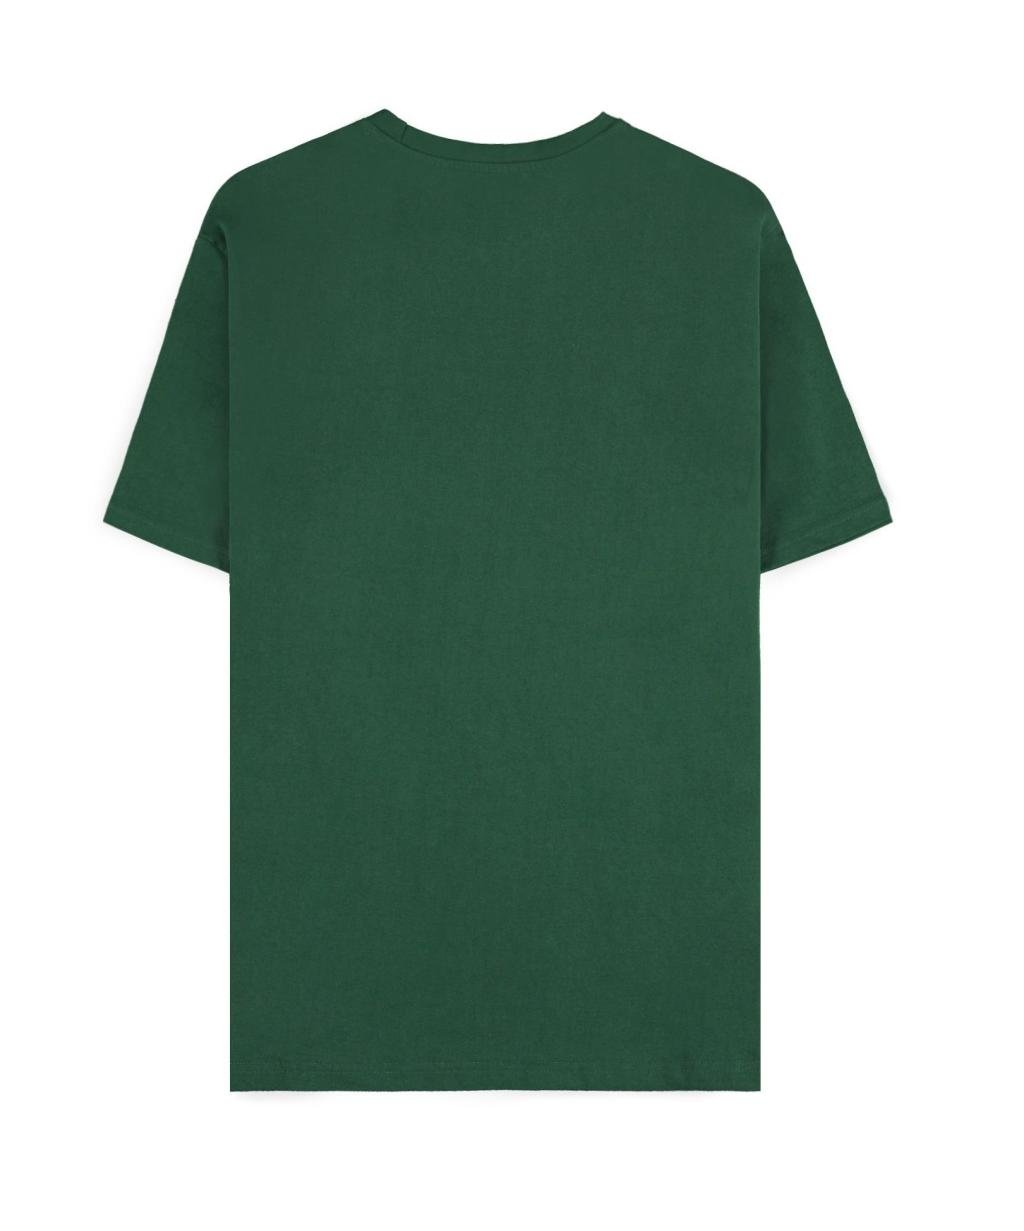 MY HERO ACADEMIA - Green Bakugo - Men's T-shirt (L)